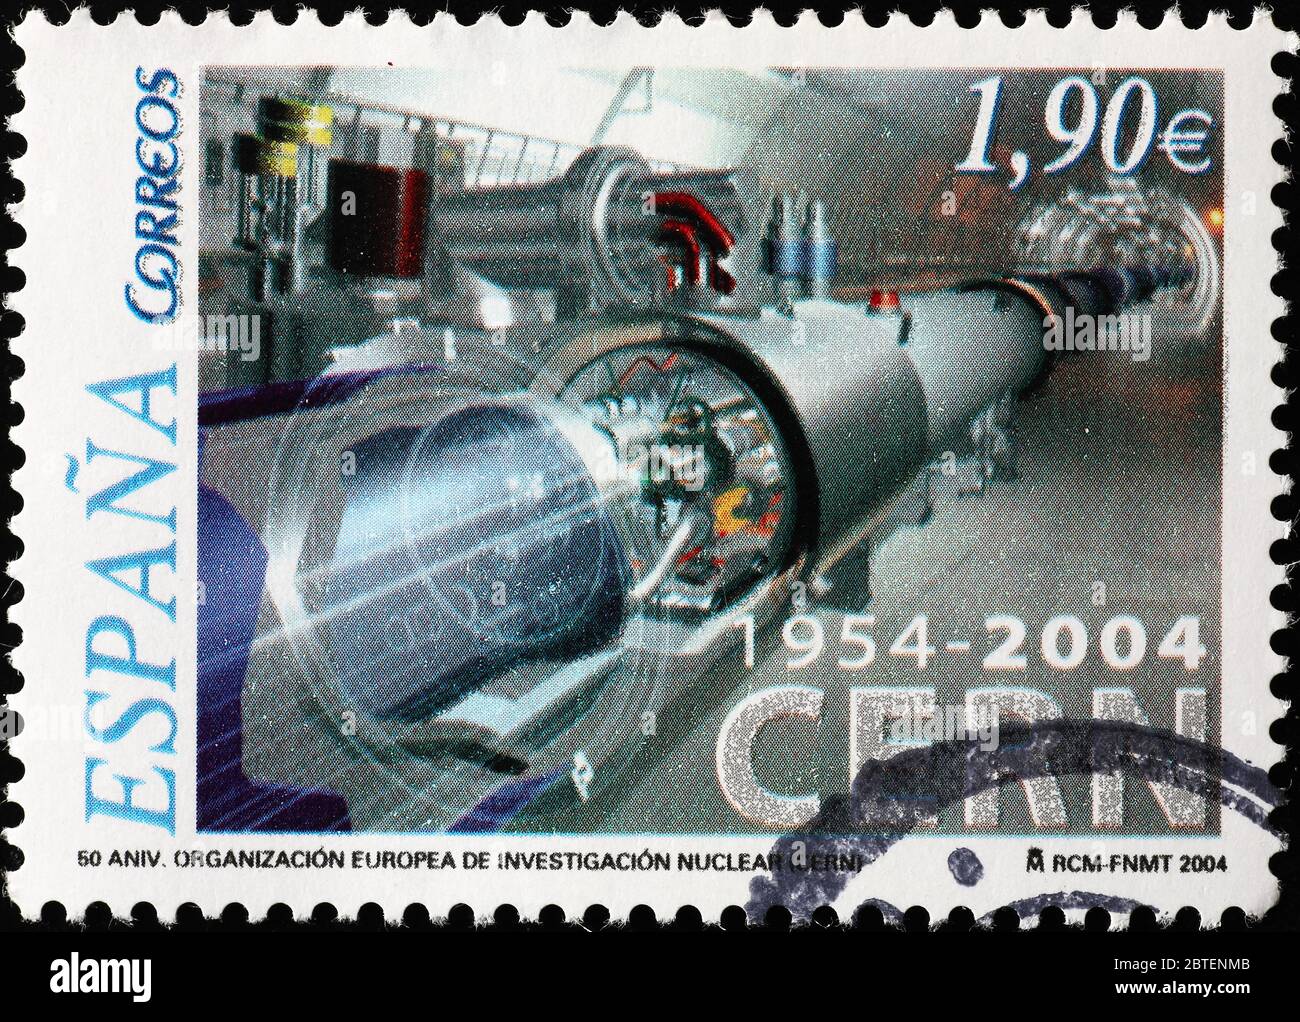 CERN of Geneva celebrated on postage stamp Stock Photo